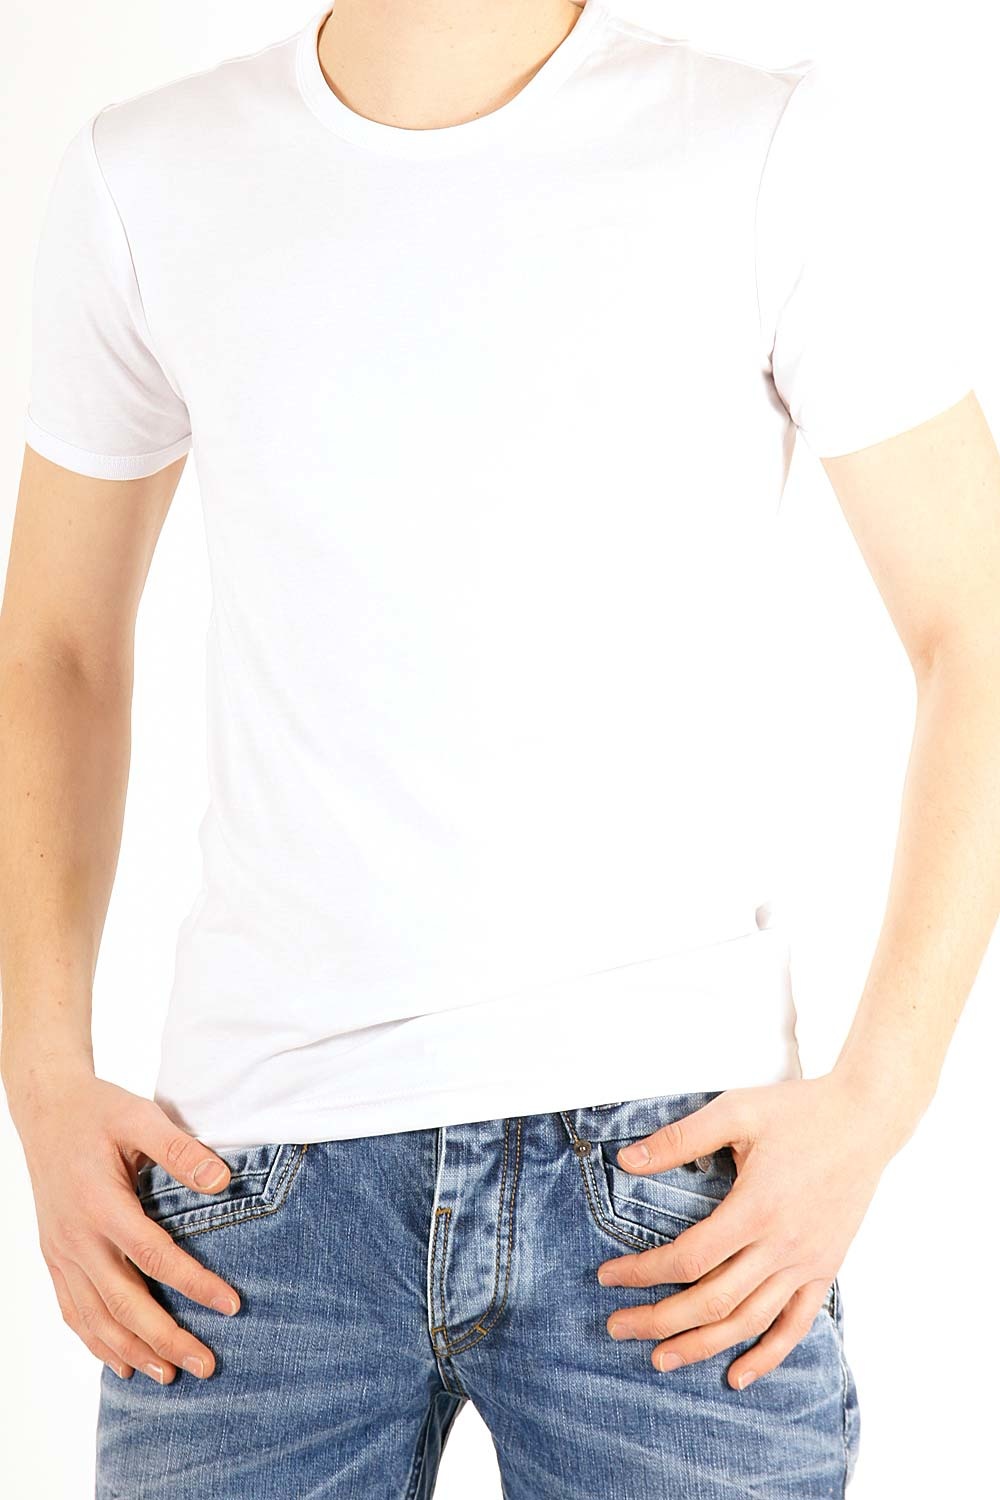 burgemeester Keer terug Melodieus G-star T-Shirt Basic Tee O-Neck White 8754124110 - Heren T-Shirt Webshop.  Jeans & Fashion Online - Leads Men & Women